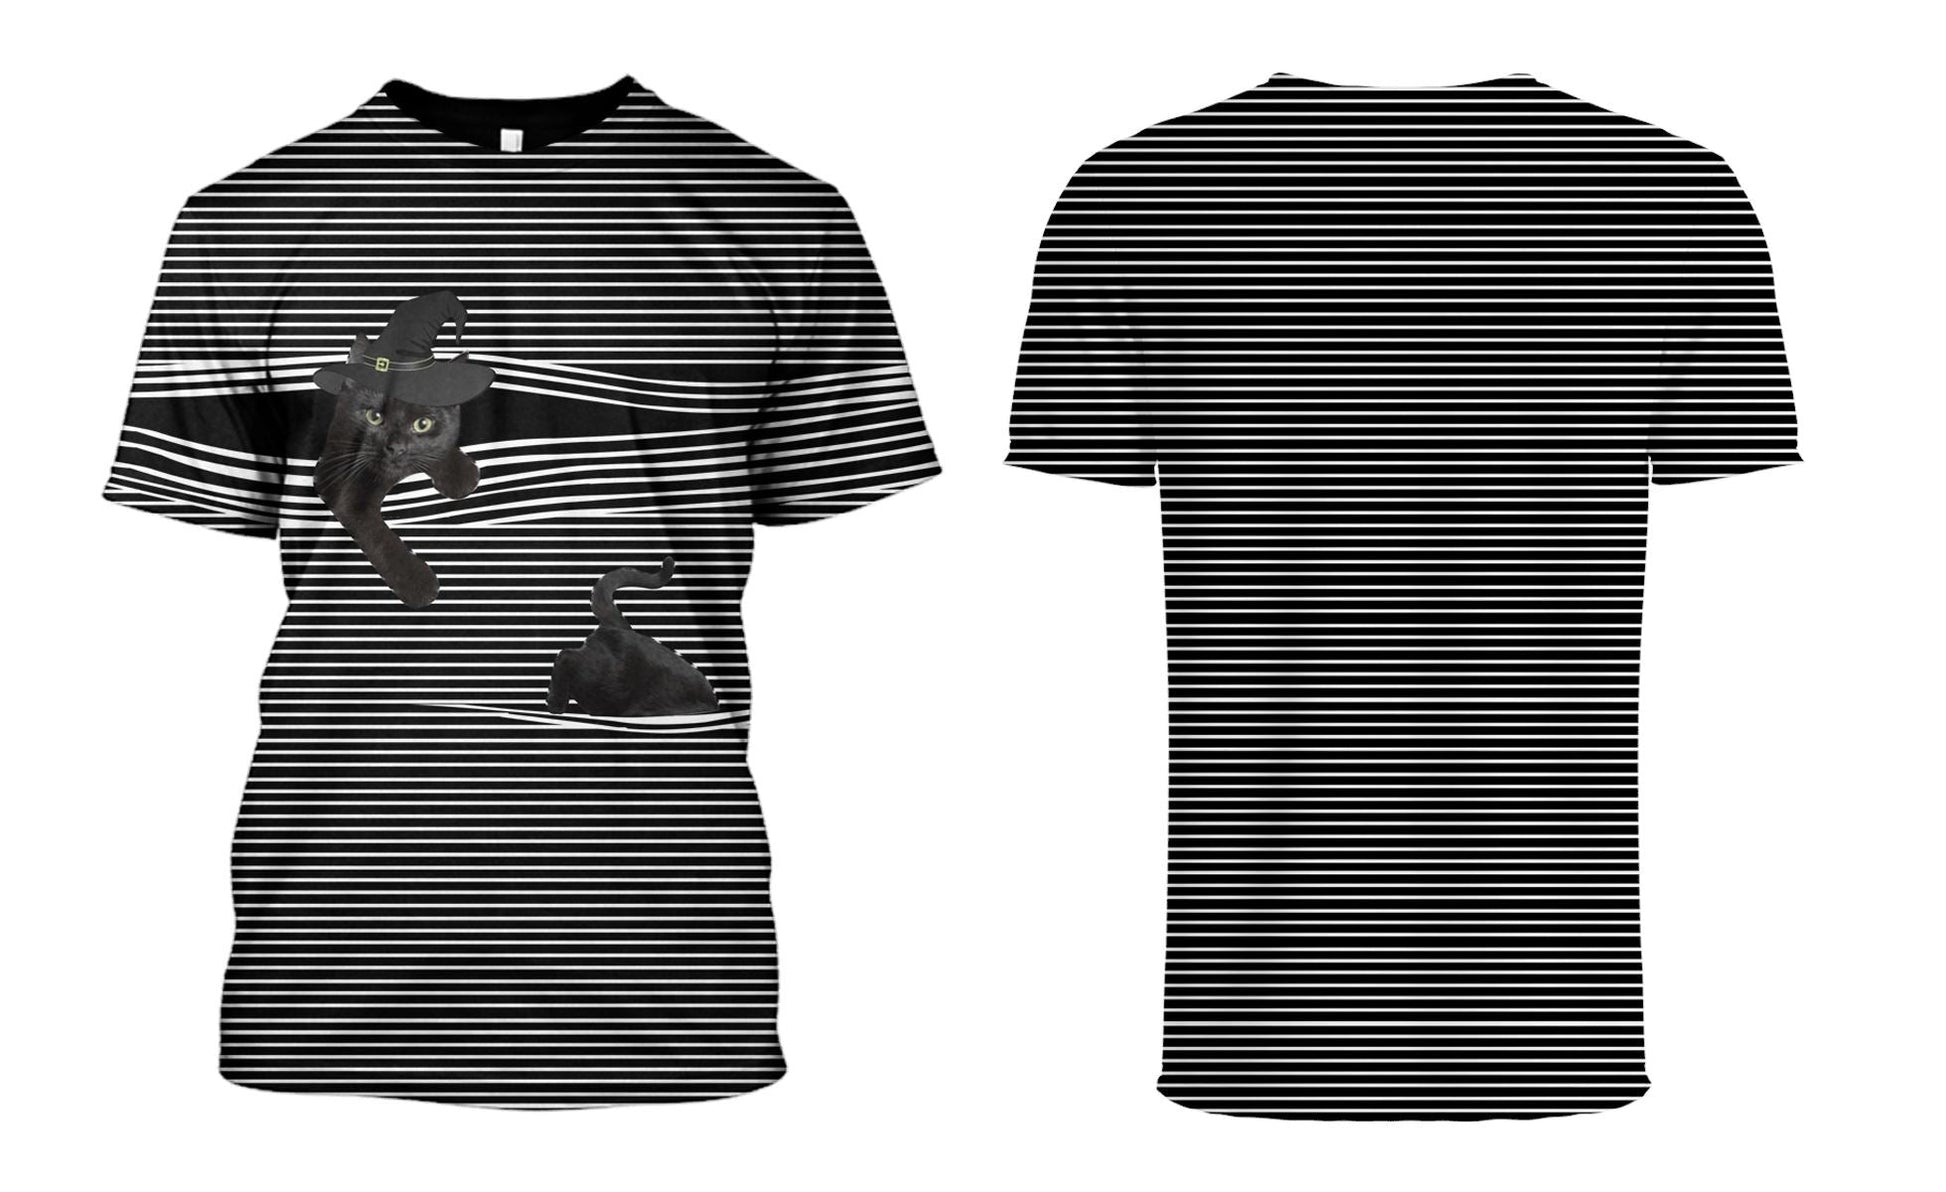 Black cat Hoodies - T-Shirts Apparel PET101115 3D Custom Fleece Hoodies 